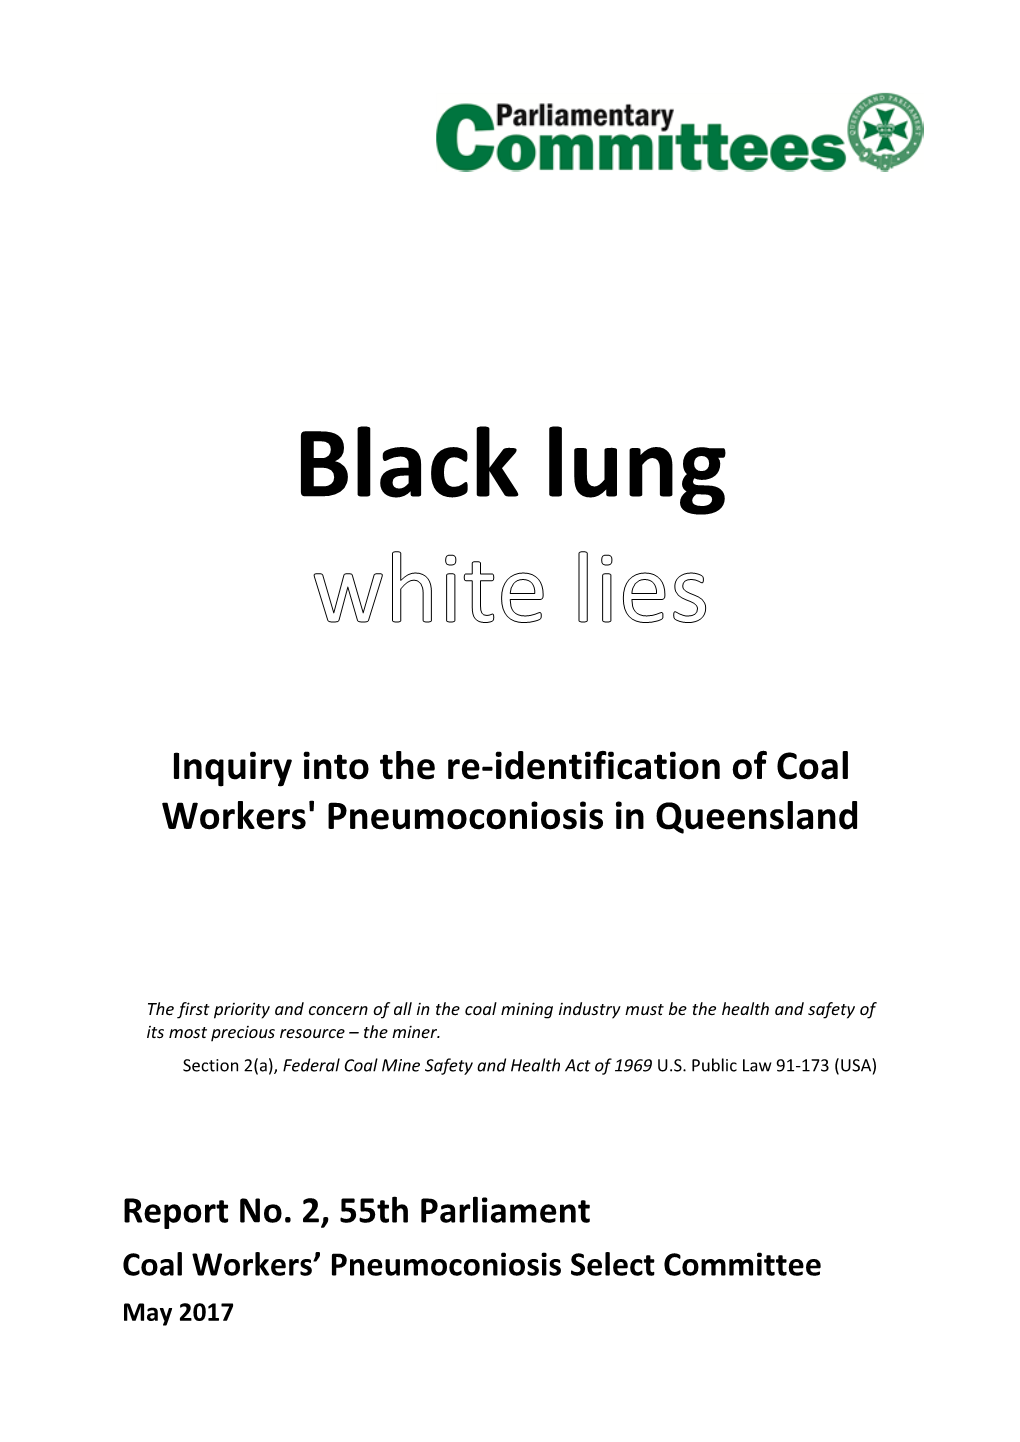 Report No. 2, 55 Parliament Coal Workers' Pneumoconiosis Select Committee